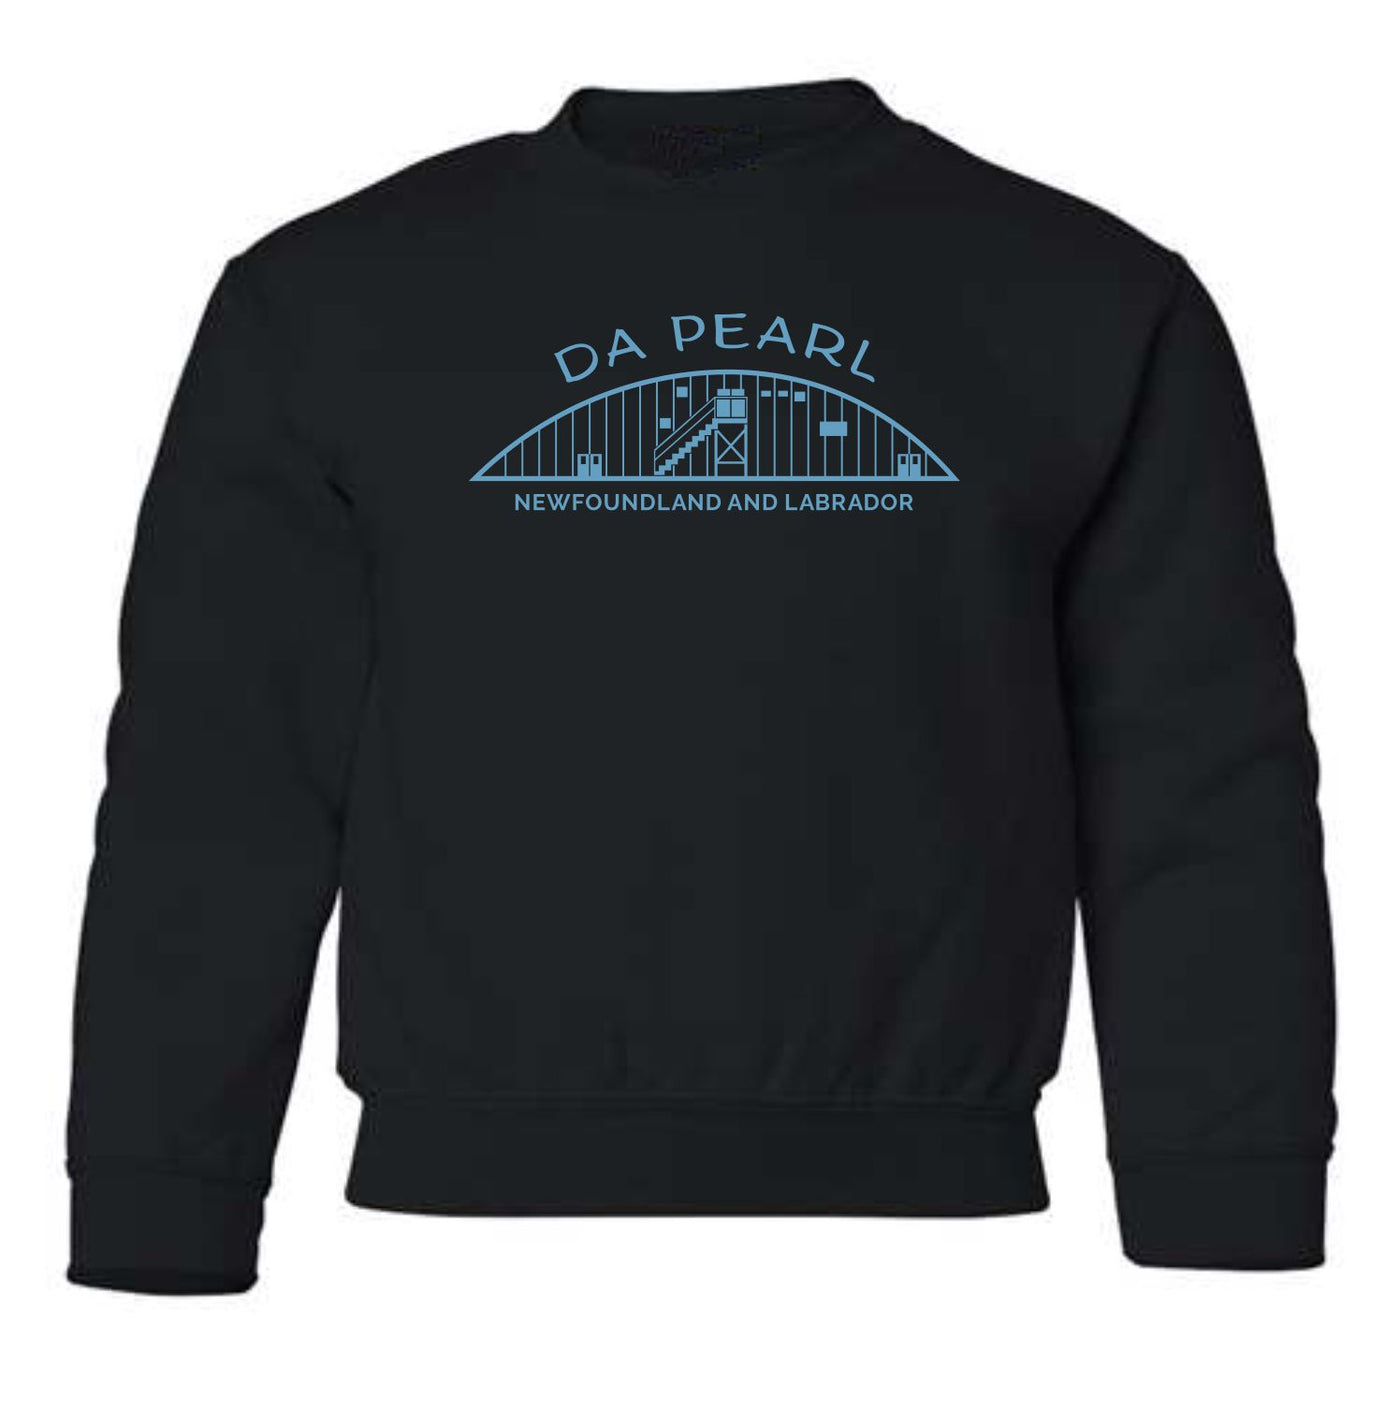 "Da Pearl" Toddler/Youth Crewneck Sweatshirt